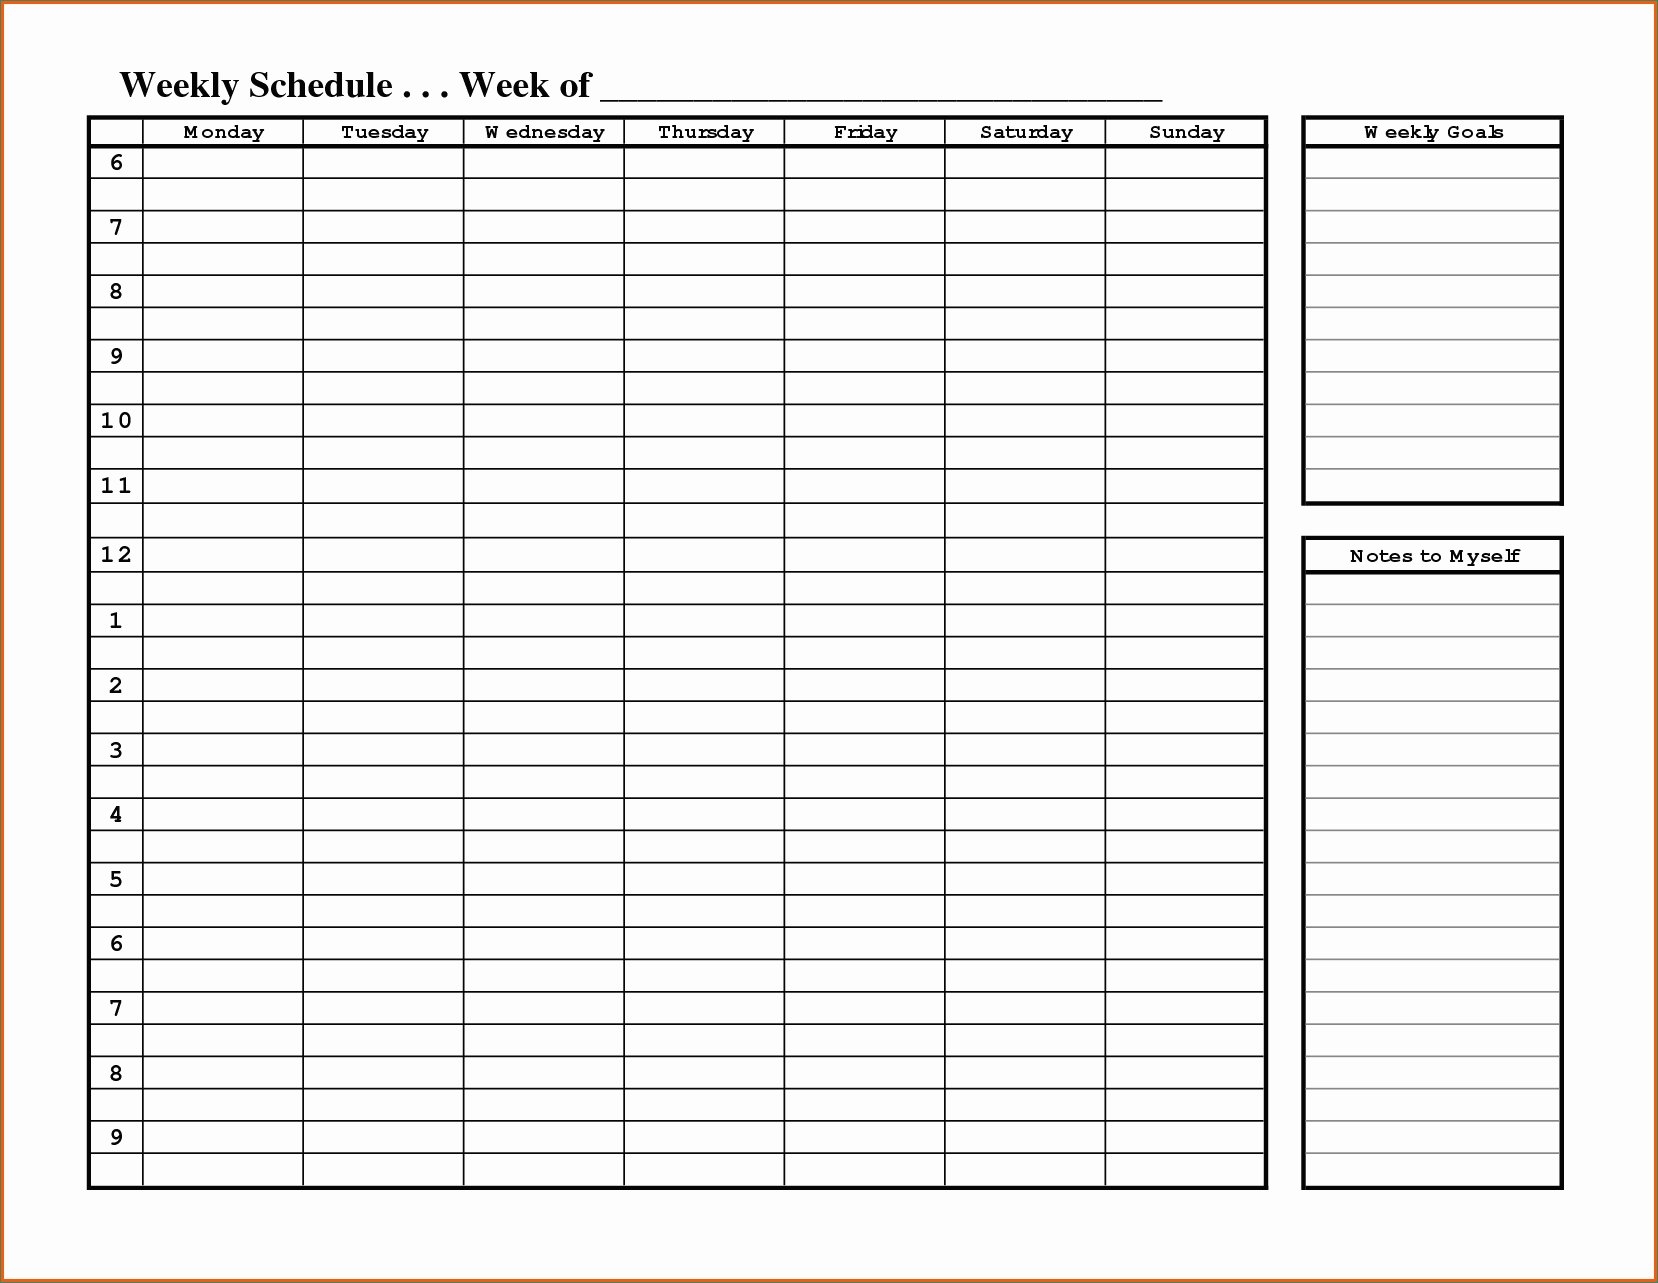 Weekday R Template Schedule Weekly Time Table Chart Printable With with Weekday Schedule With Time Slots